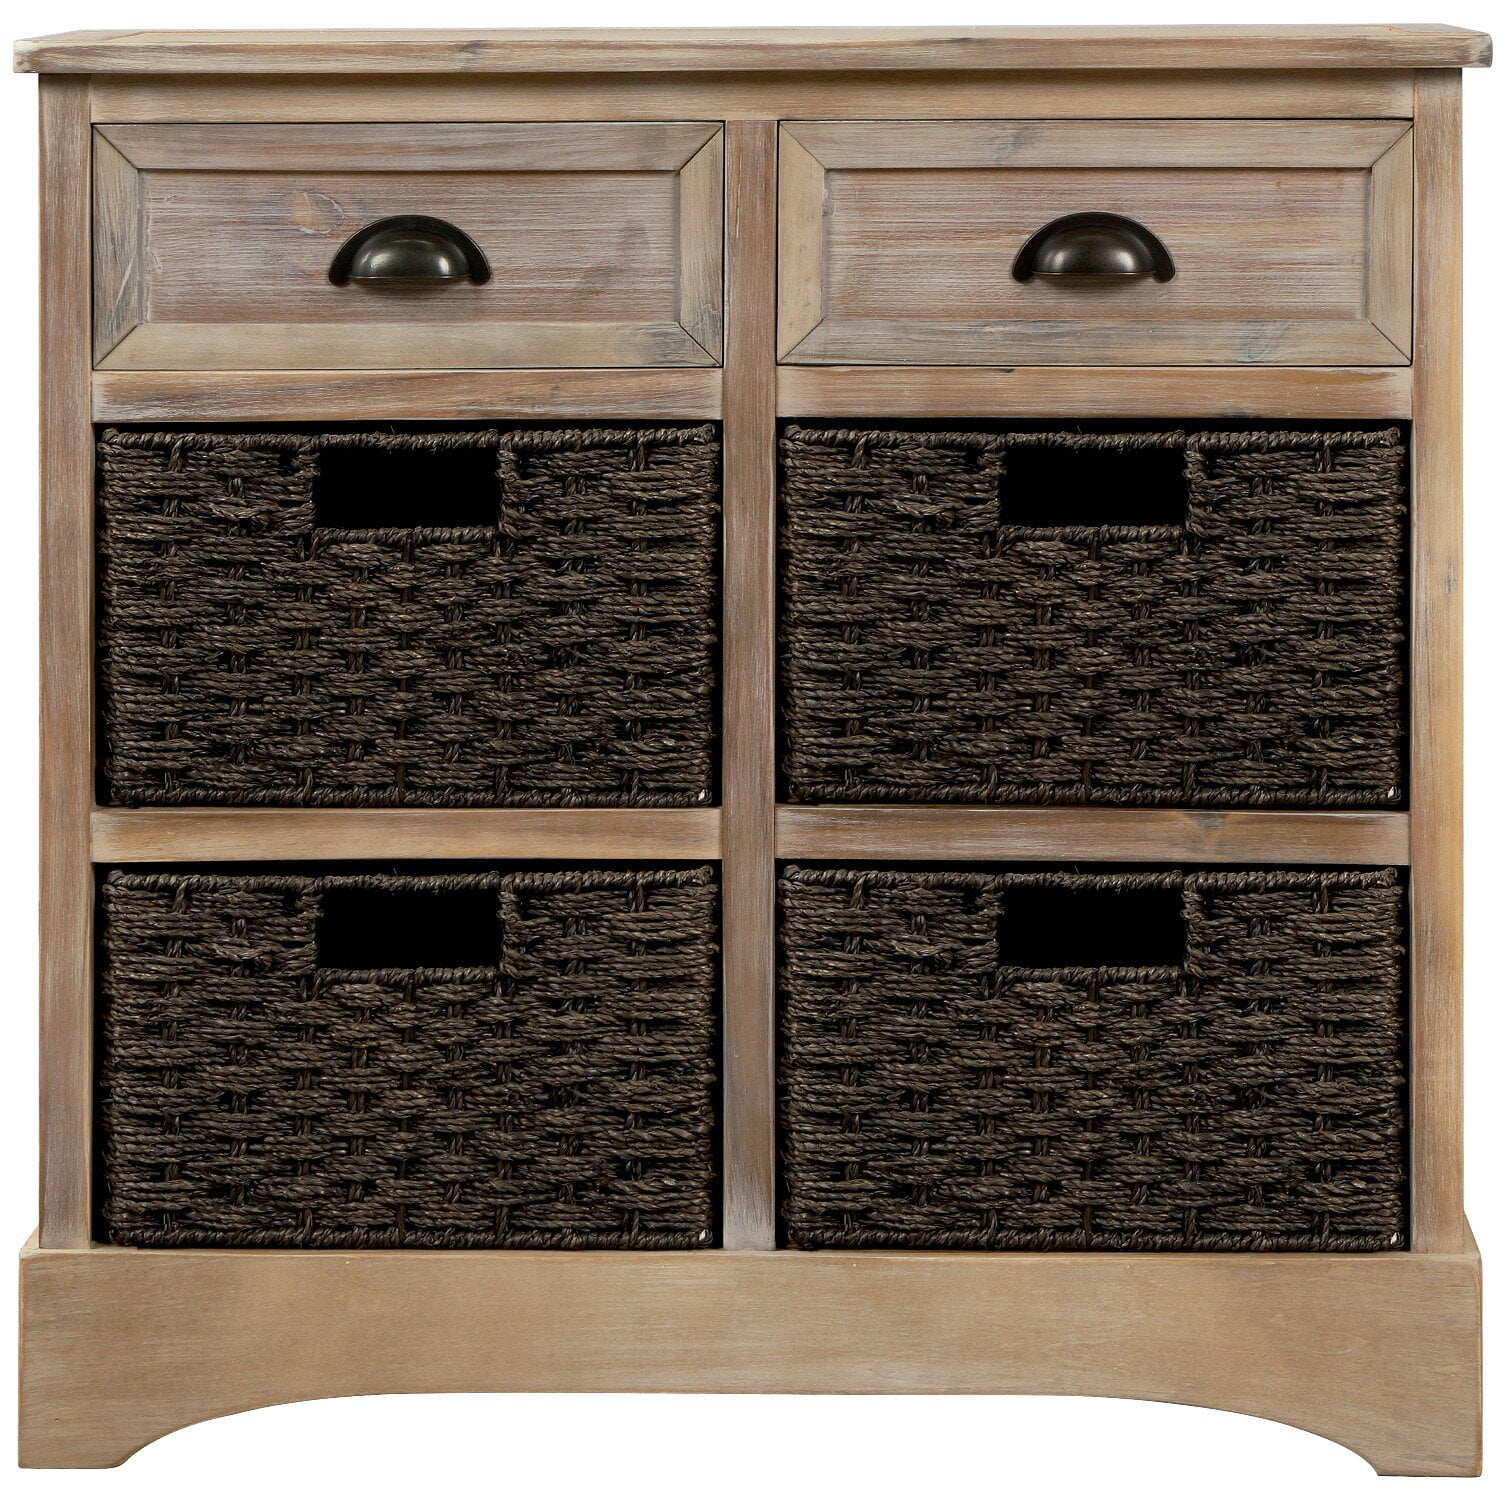 NEW Wooden Basket Storage Chest with 6 Drawer Baskets Bedroom Furniture US 